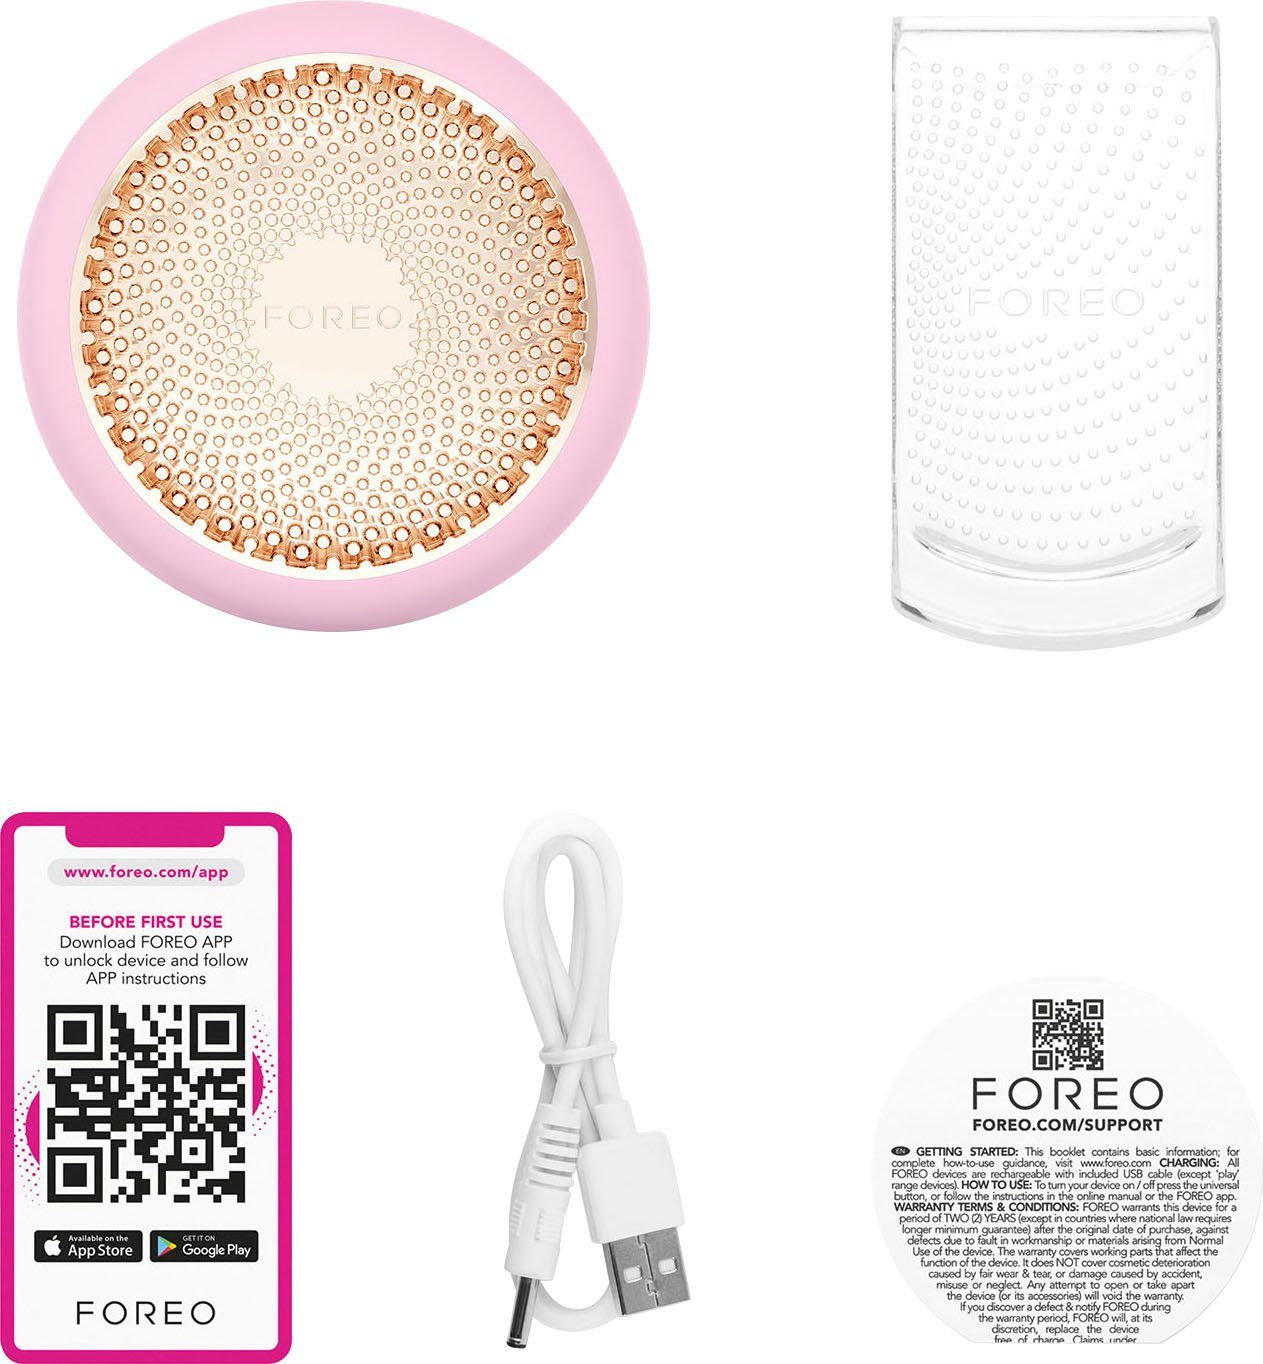 UFO™ Pearl 3 FOREO Kosmetikbehandlungsgerät Pink